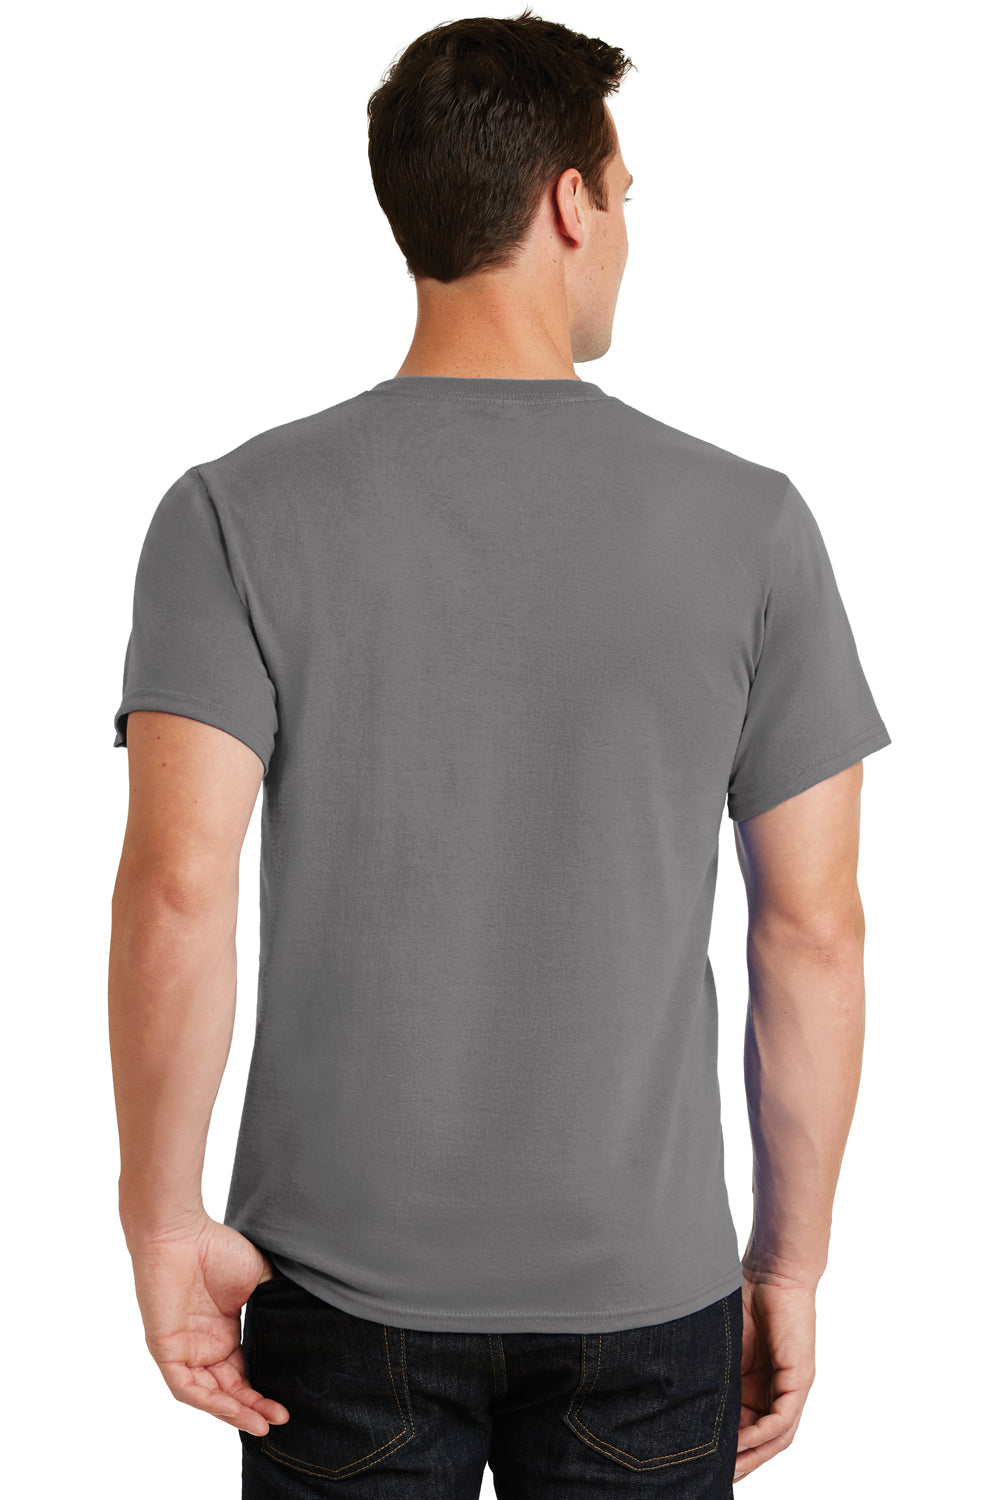 Port & Company PC61 Mens Essential Short Sleeve Crewneck T-Shirt Medium Grey Back